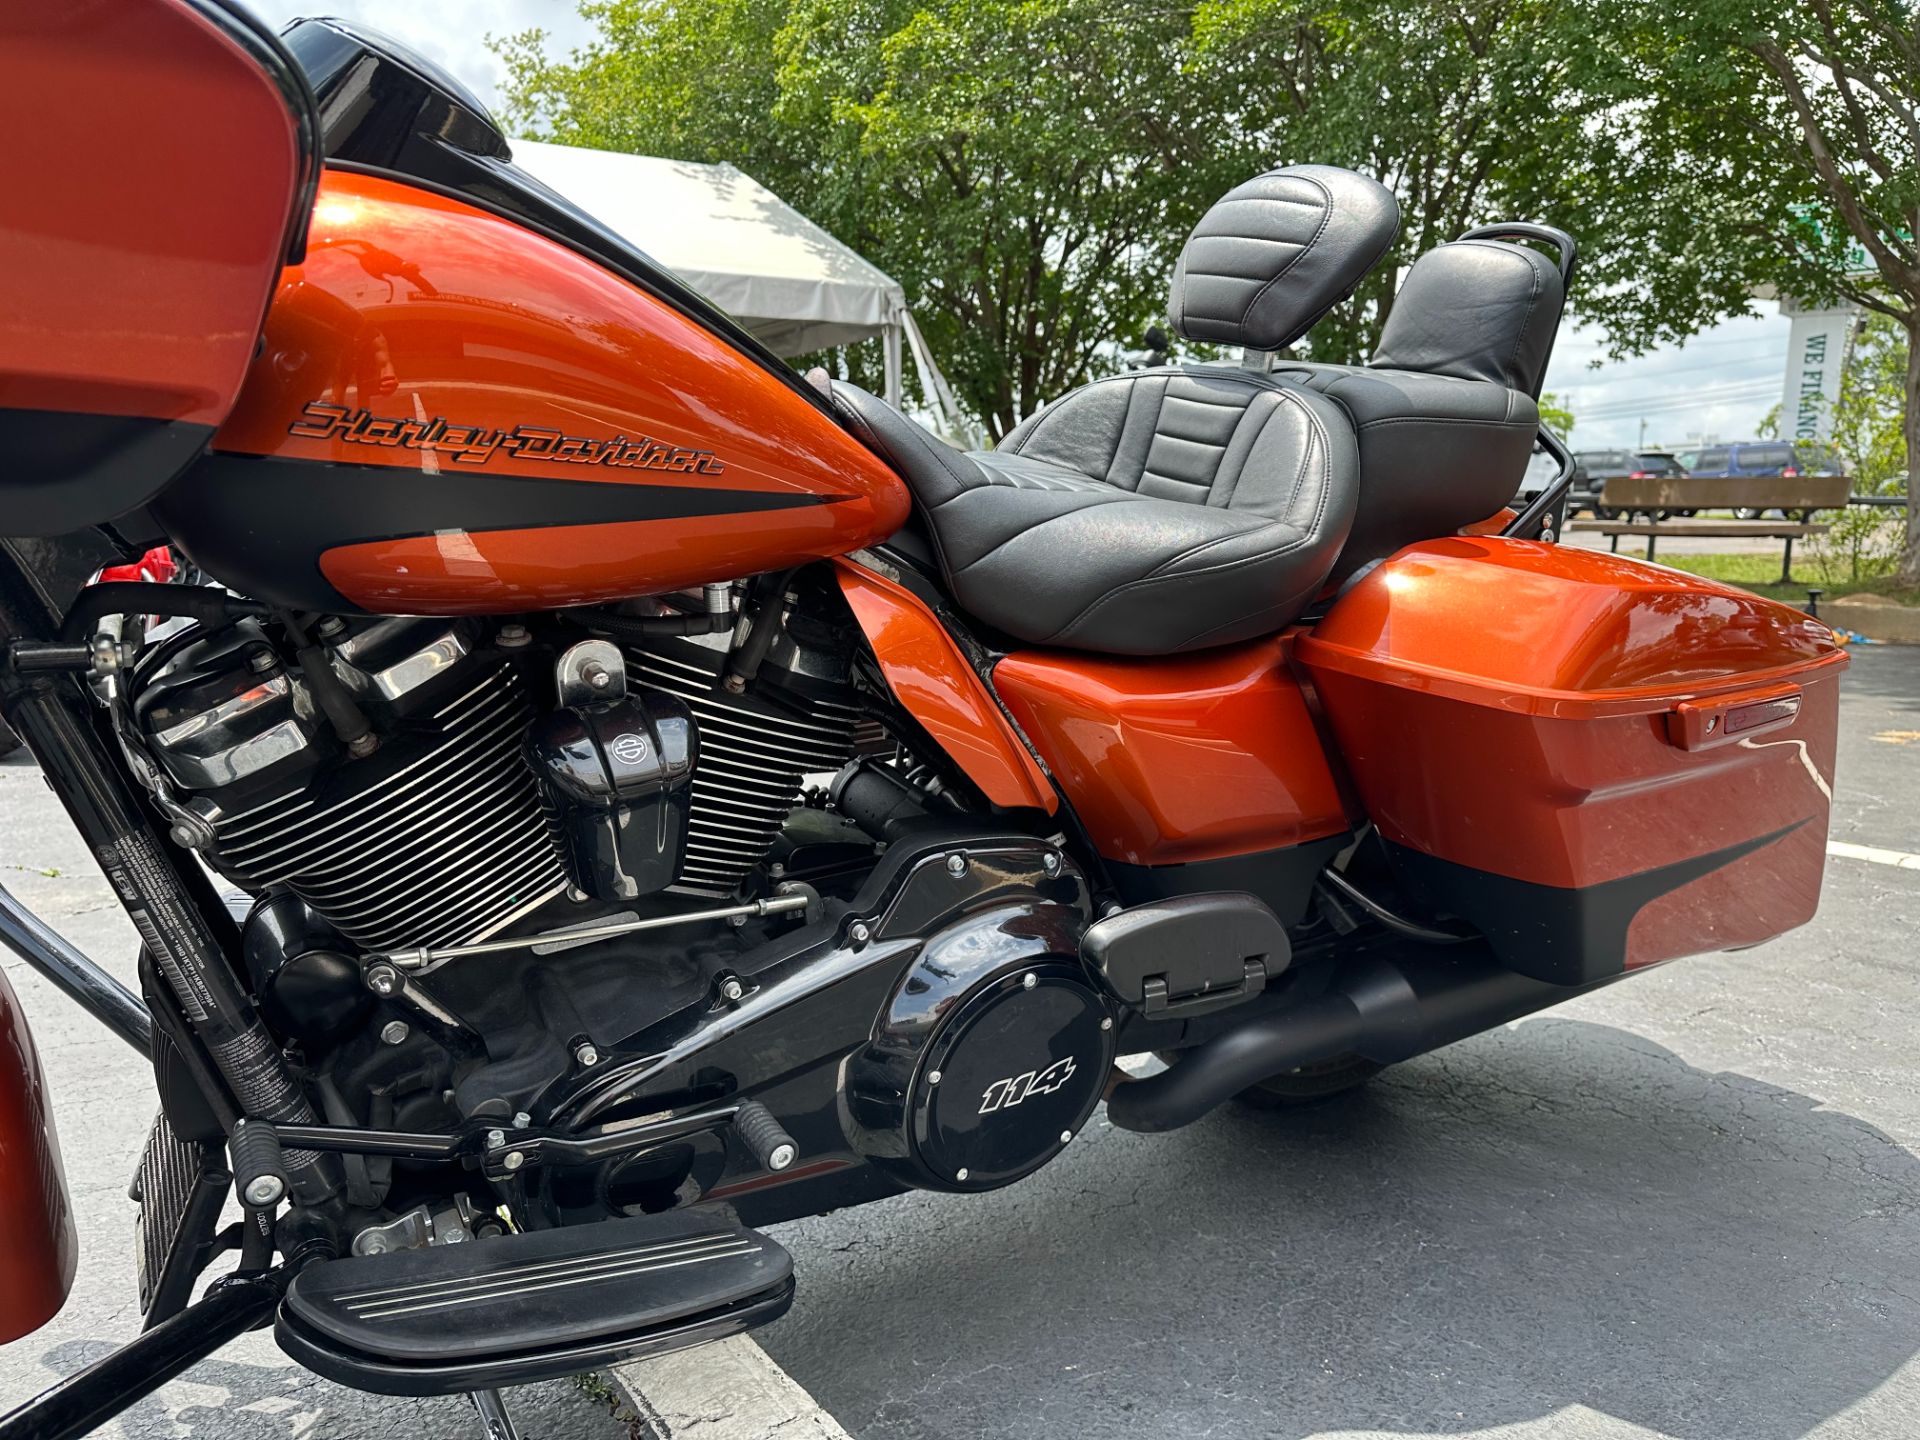 2019 Harley-Davidson Road Glide® Special in Mobile, Alabama - Photo 12